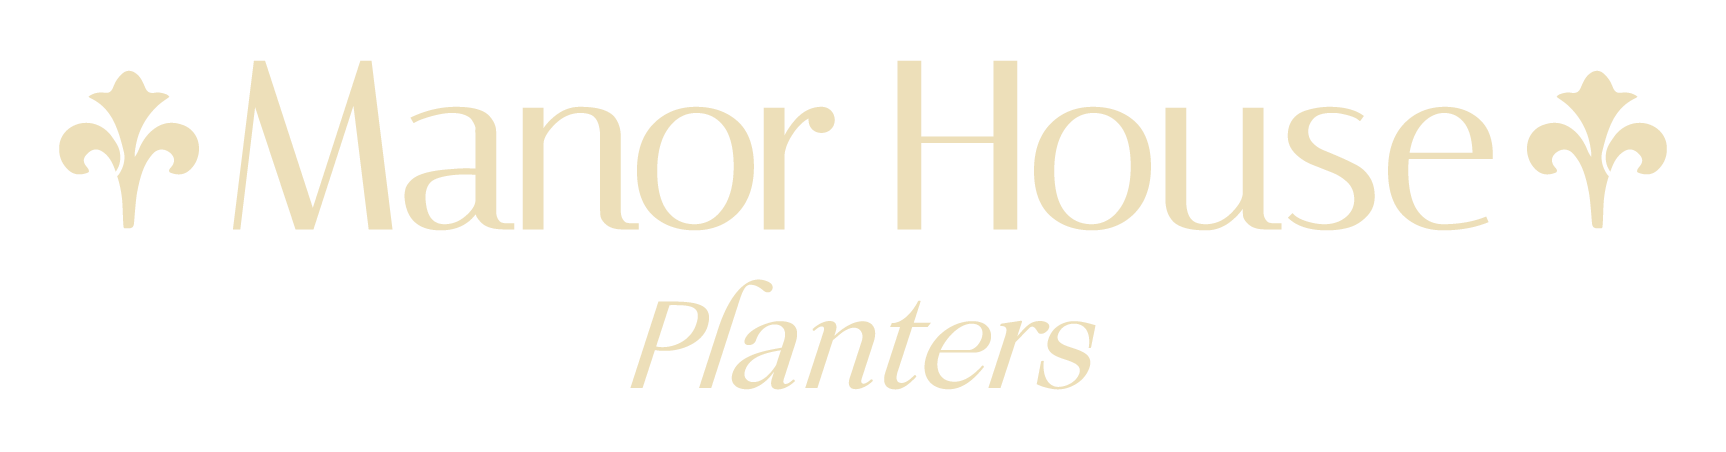 Manor House Planters